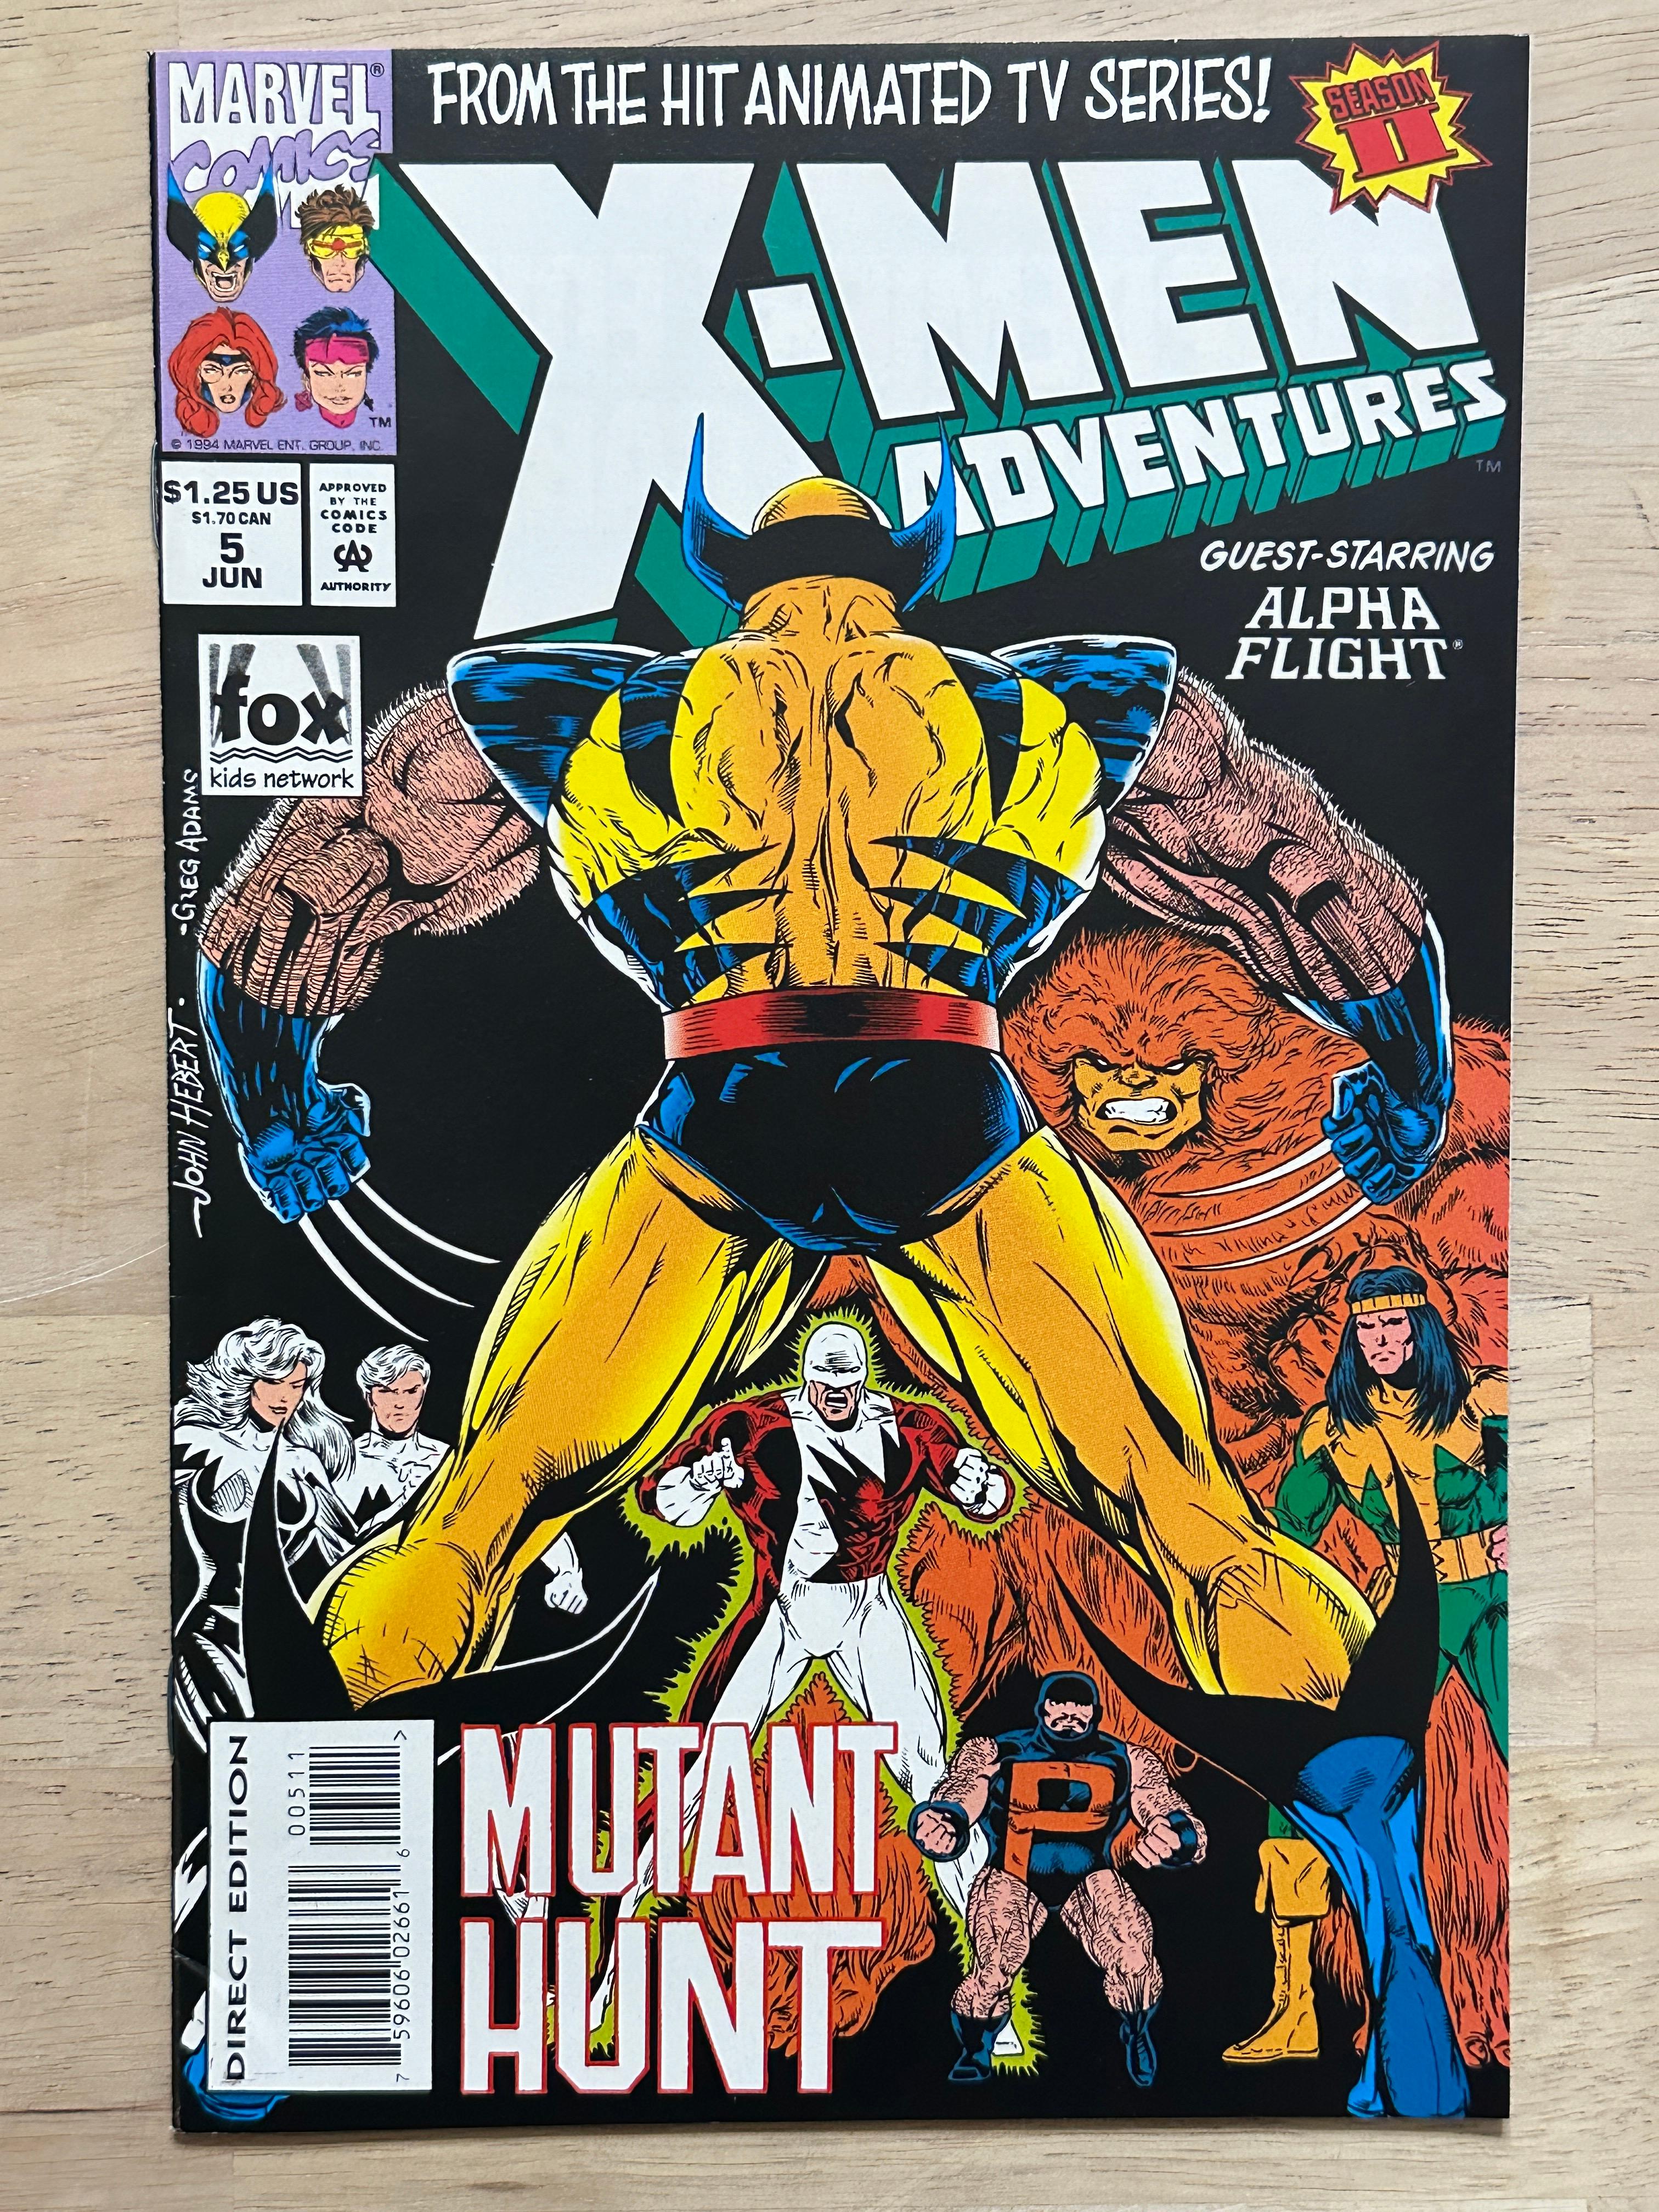 (8) Vintage Marvel X-Men Comics